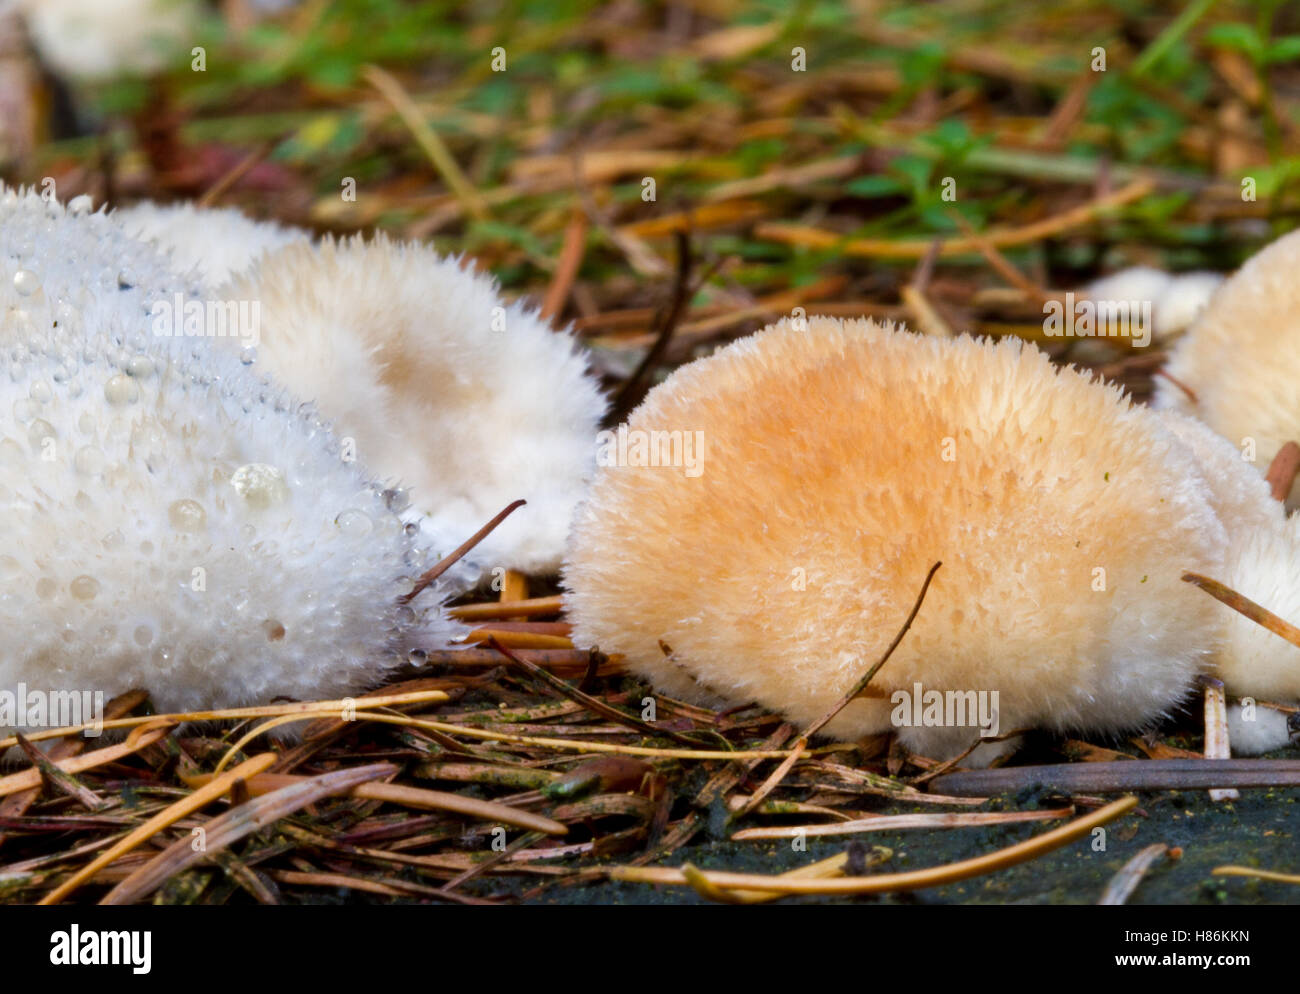 Some slime molds on pine needles Stock Photo